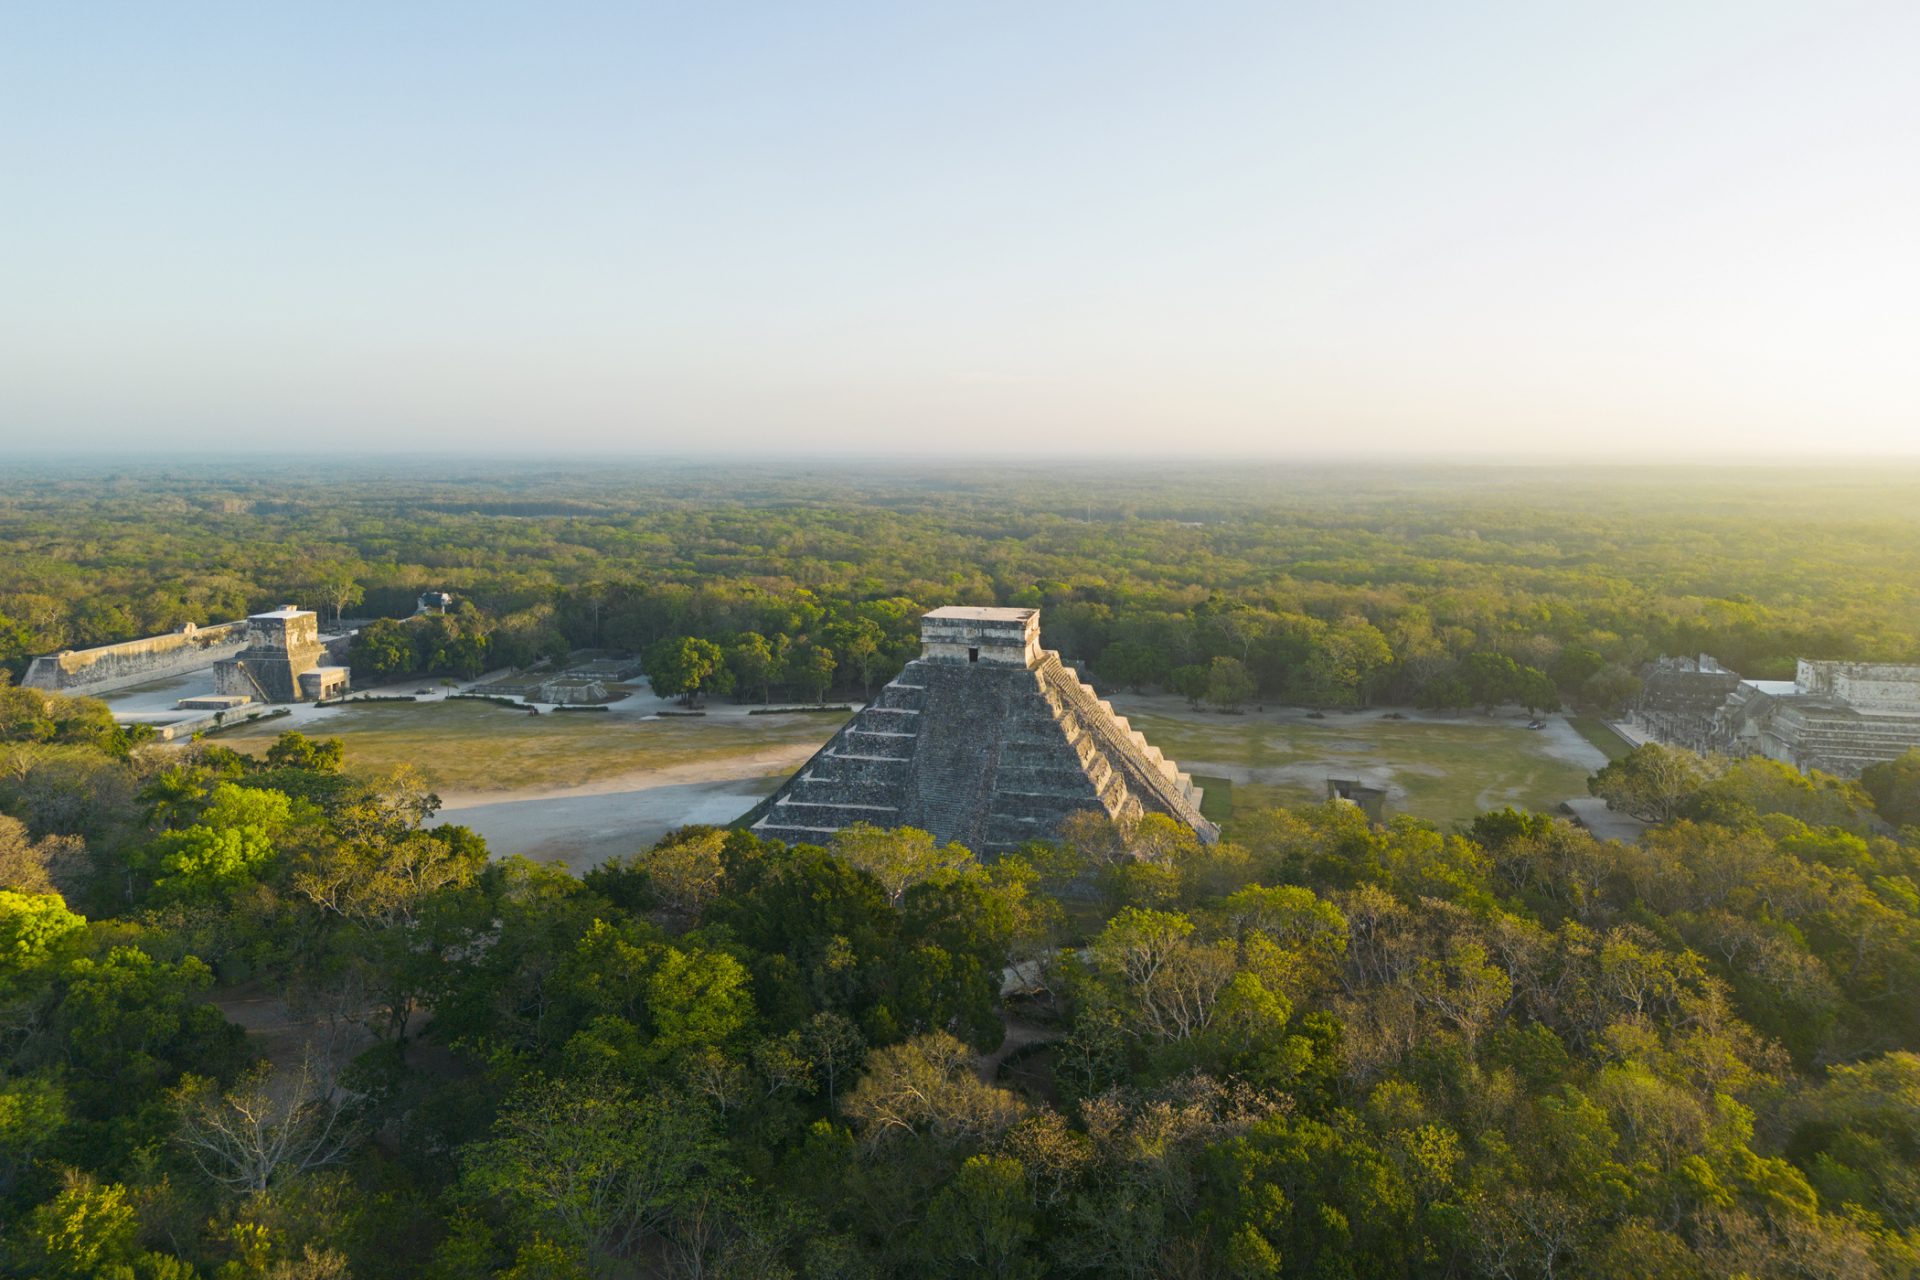 The secrets of Chichén Itzá revealed